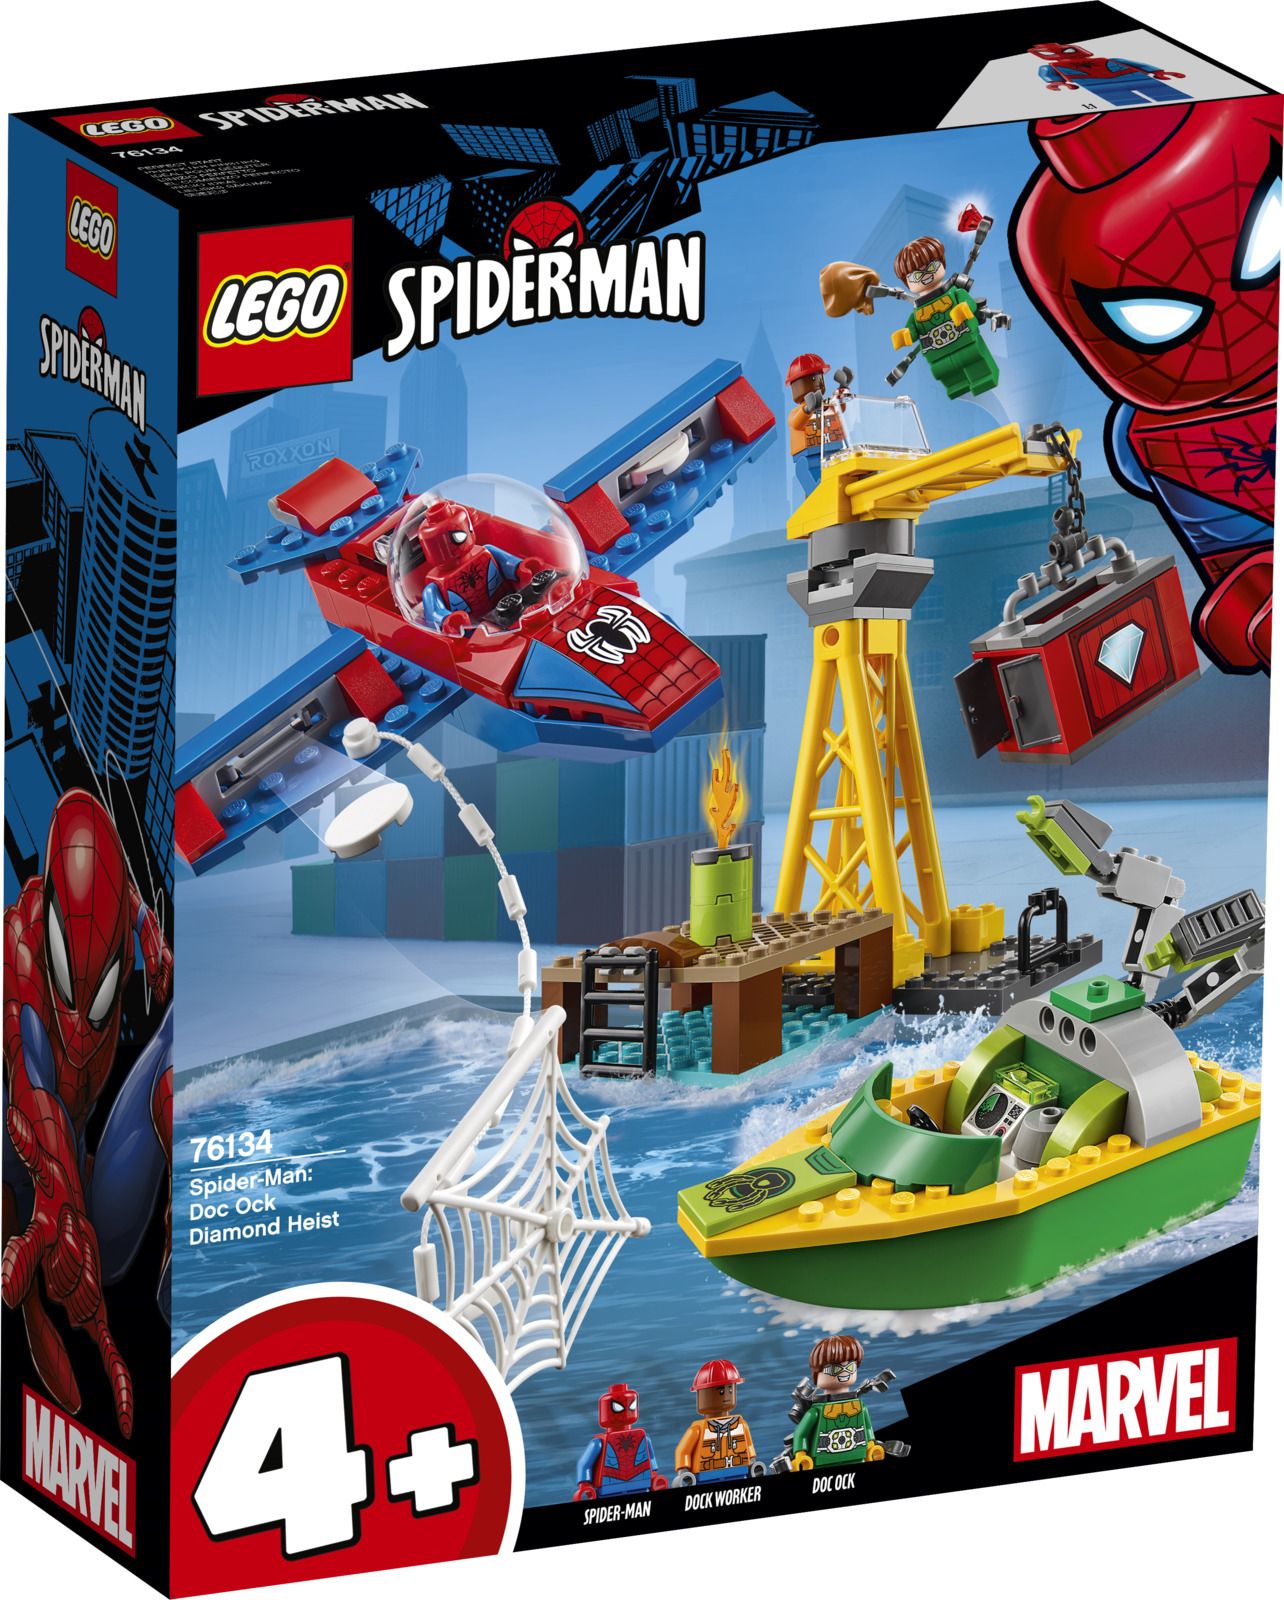 LEGO Super Heroes Marvel 76134 -:     